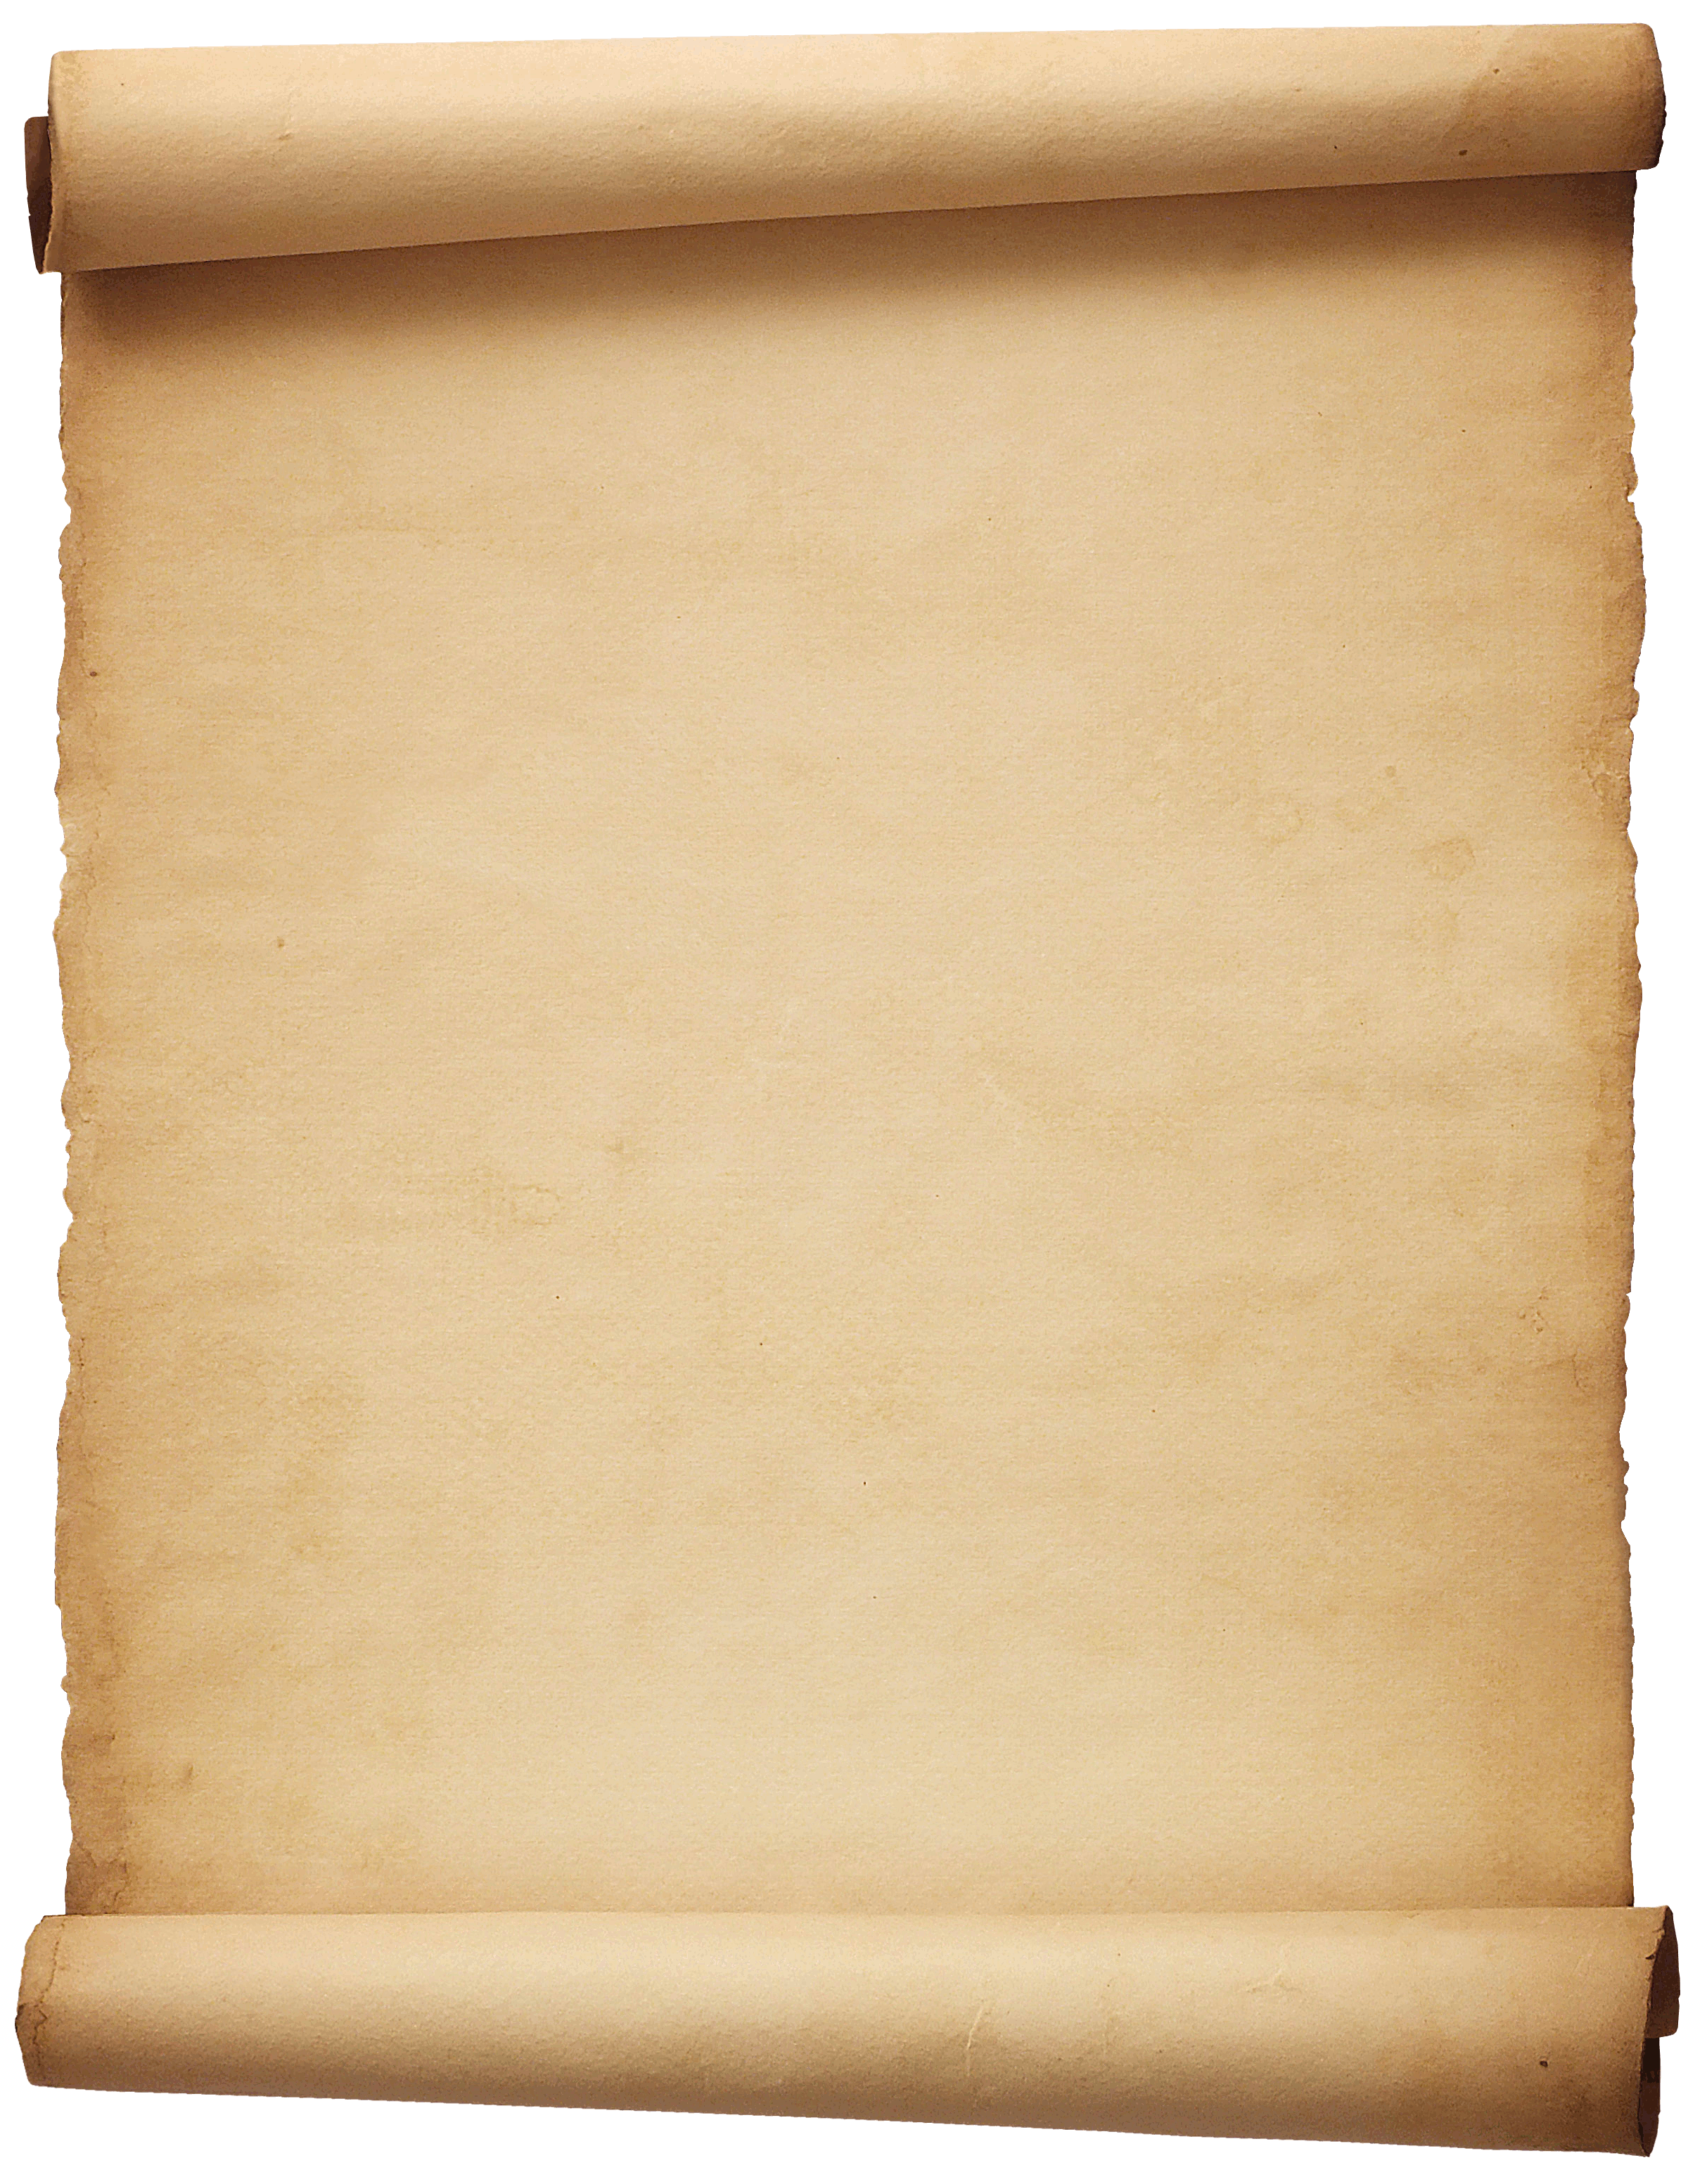 Blank Parchment Paper | Free Download Clip Art | Free Clip Art ...